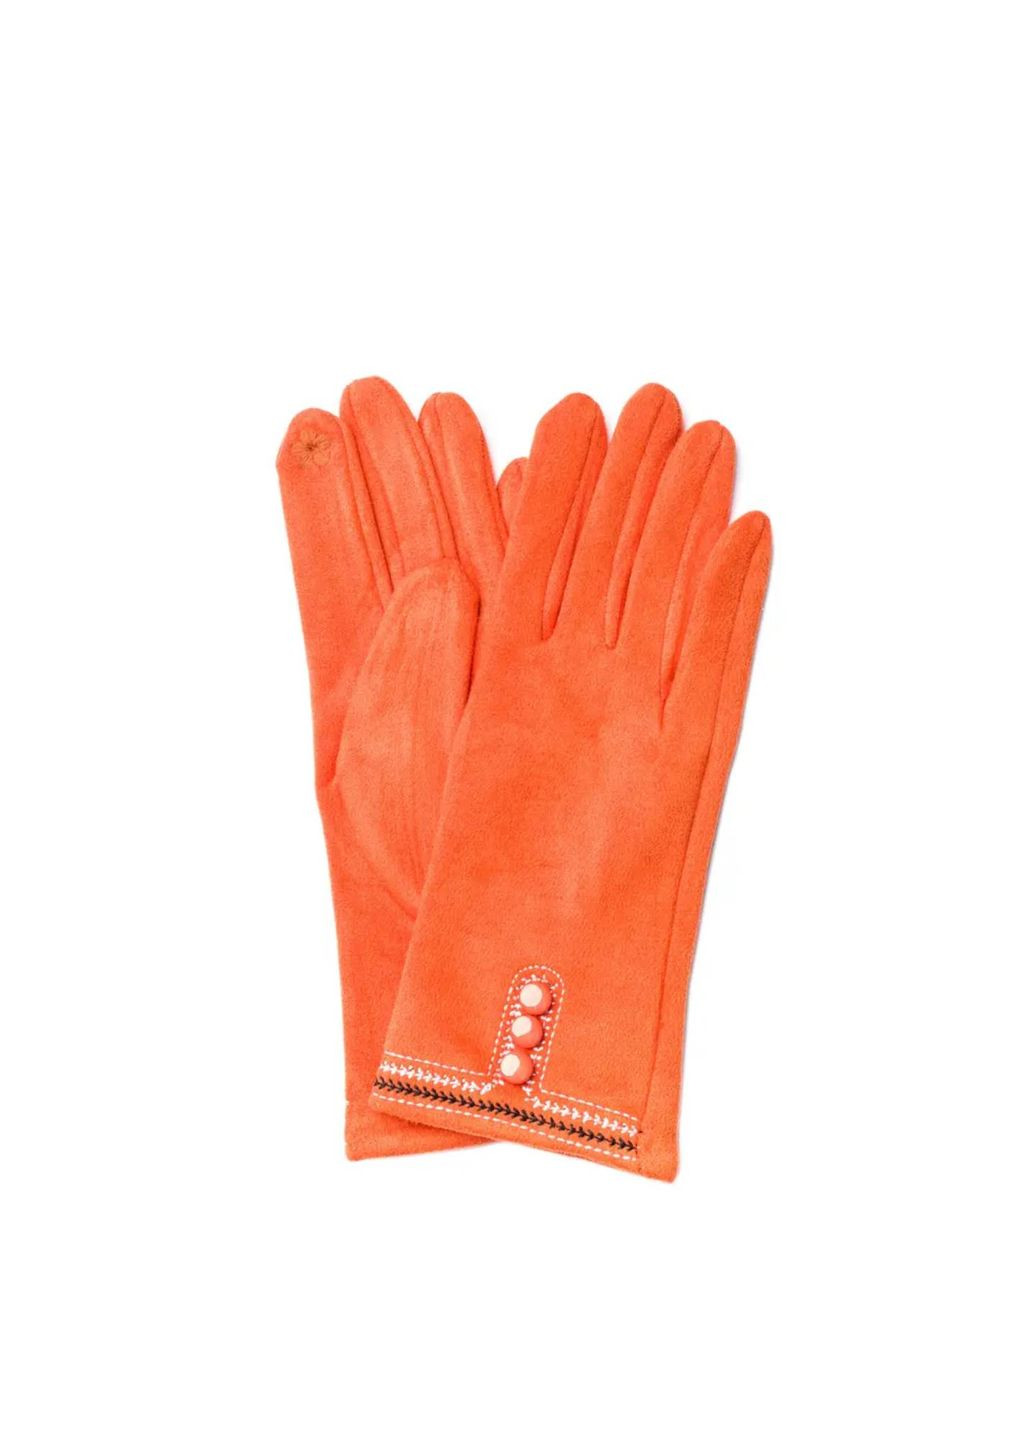 Перчатки Smart Touch женские экозамш оранжевые LuckyLOOK 688-606 (290278149)